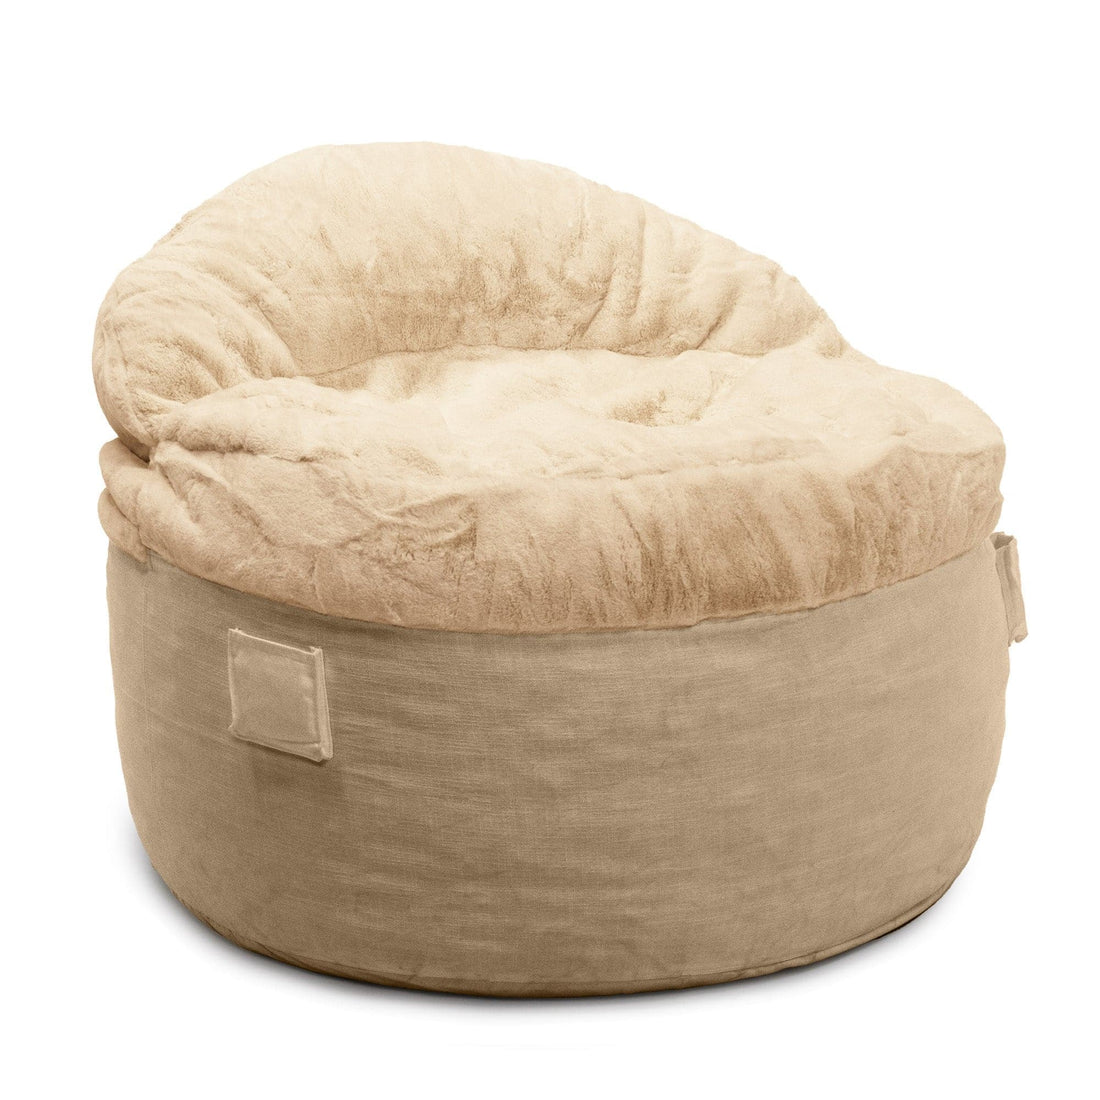 Adult Bean Bag Chair - Full - NEST Bunny Fur